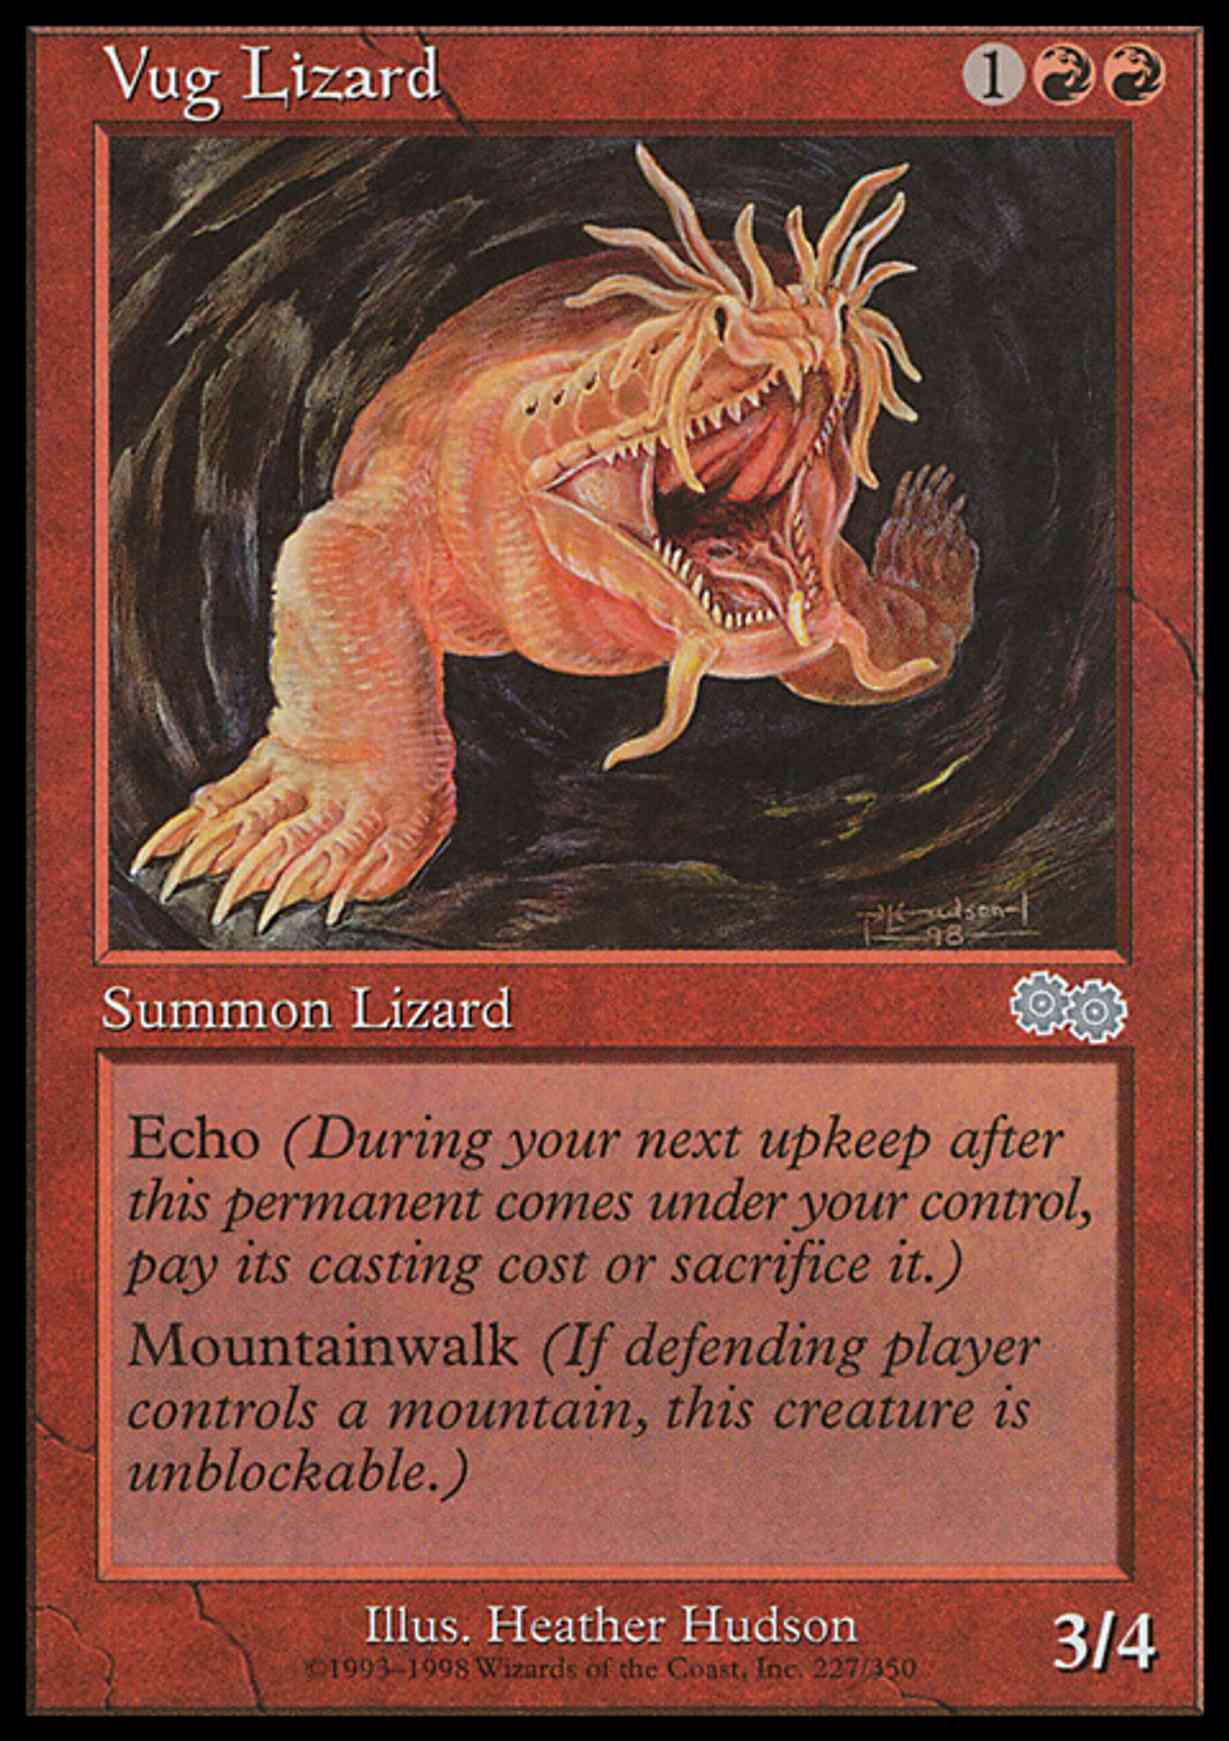 Vug Lizard magic card front